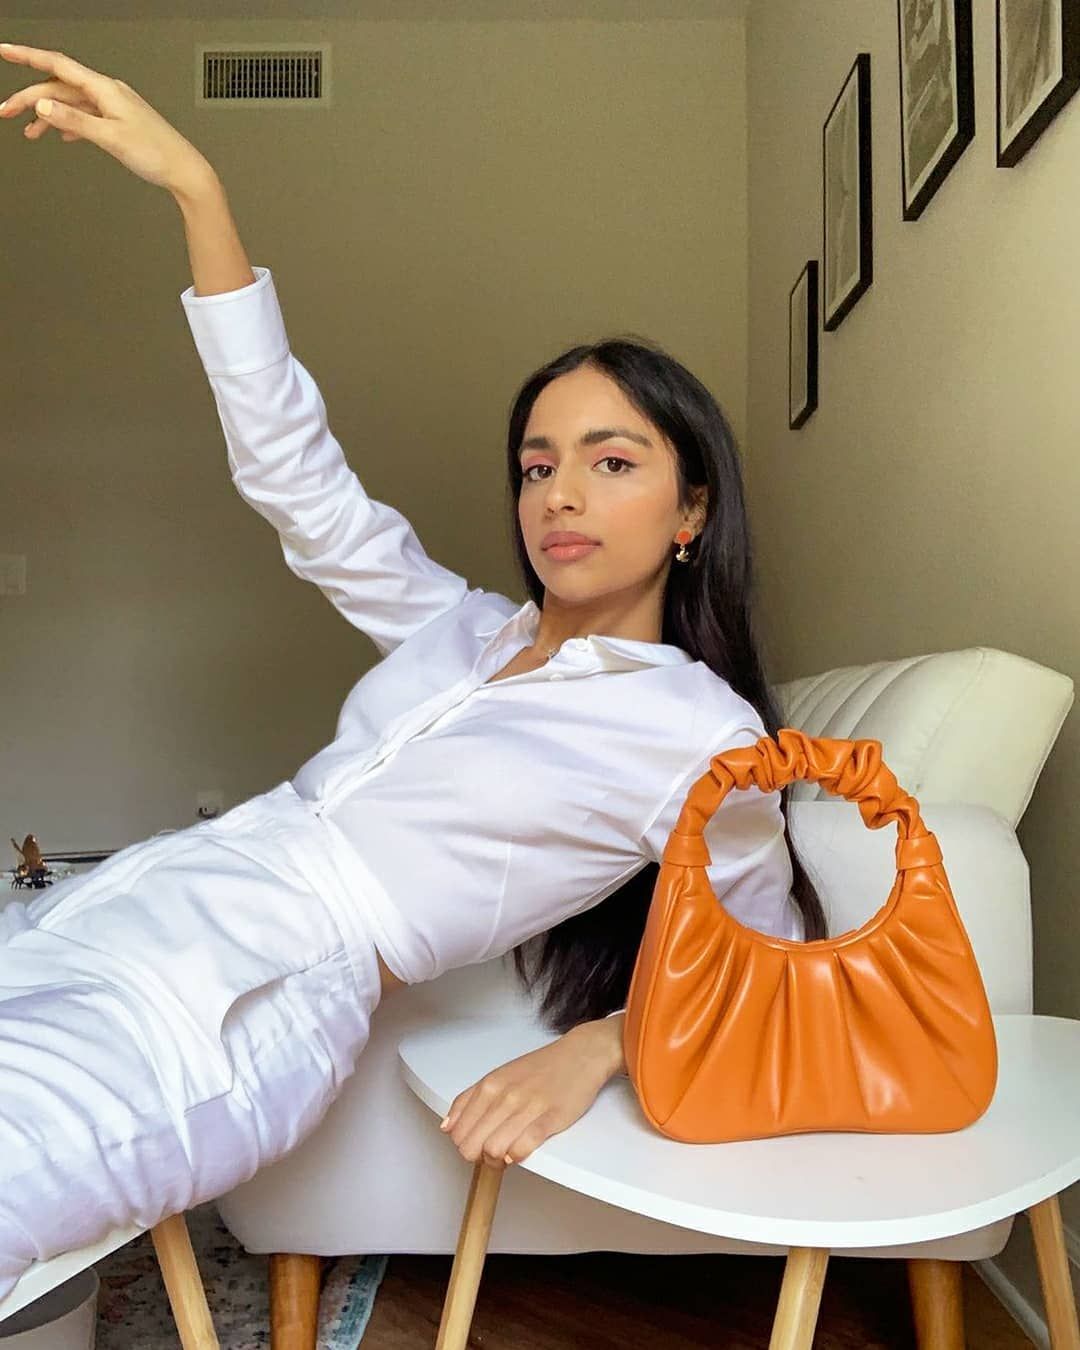 malvika sheth wears a white outfit with an orange jw pei gabbi bag